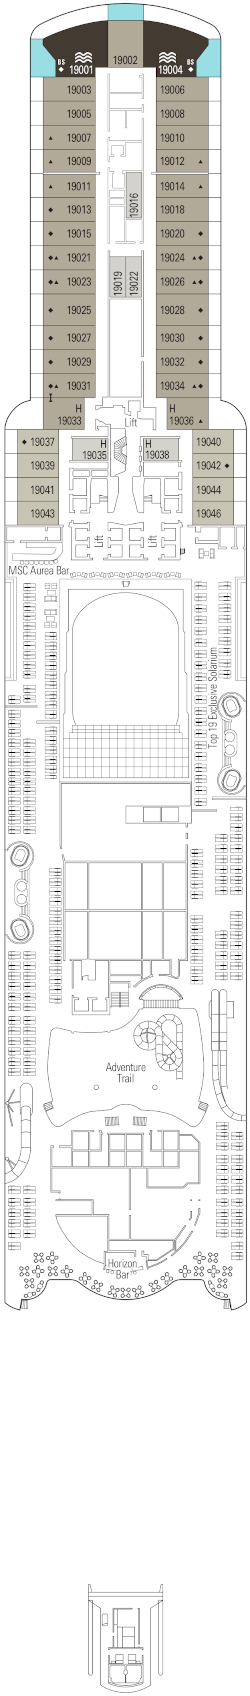 Msc Seashore Deck 19 Deck Plan